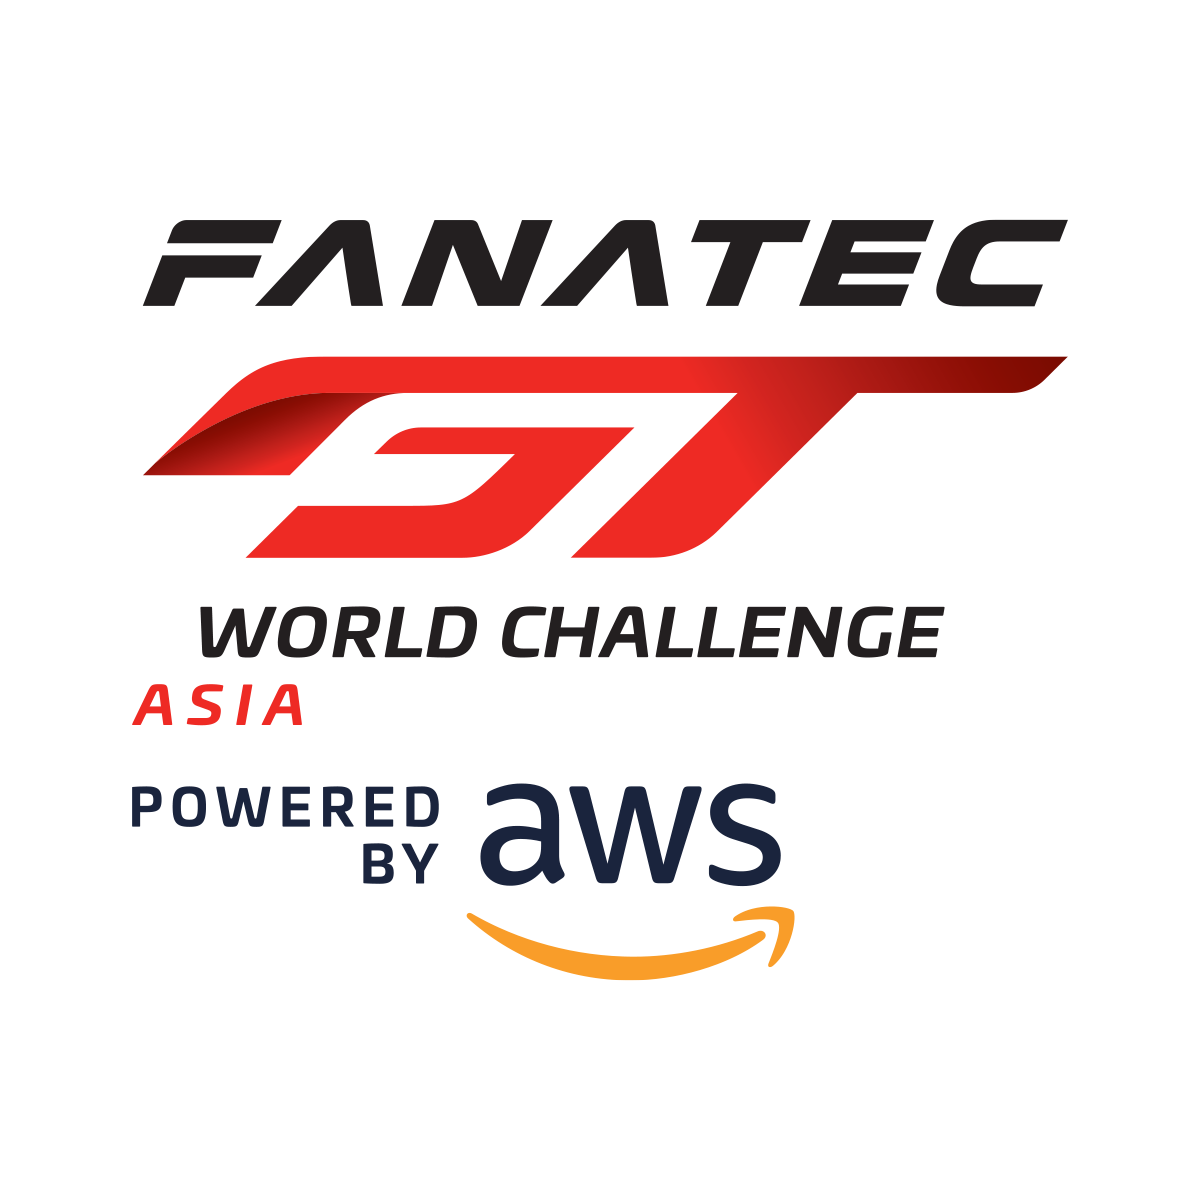 Fanatec GT World Challenge Asia